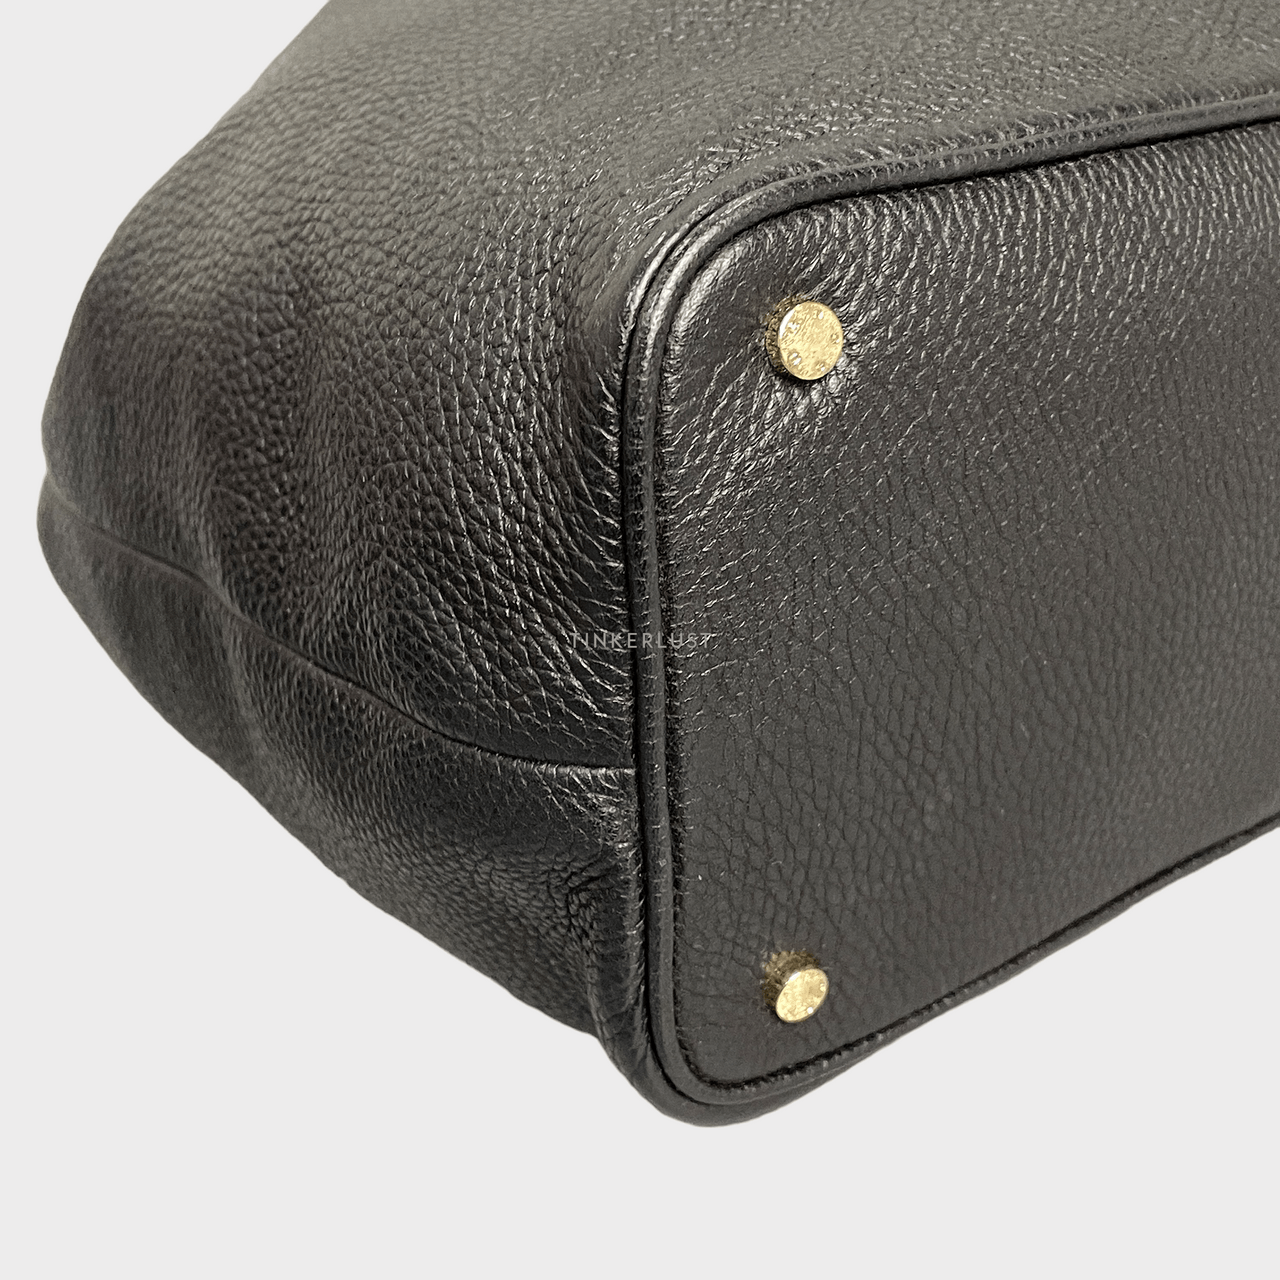 Aigner Black Leather GHW Bucket Bag